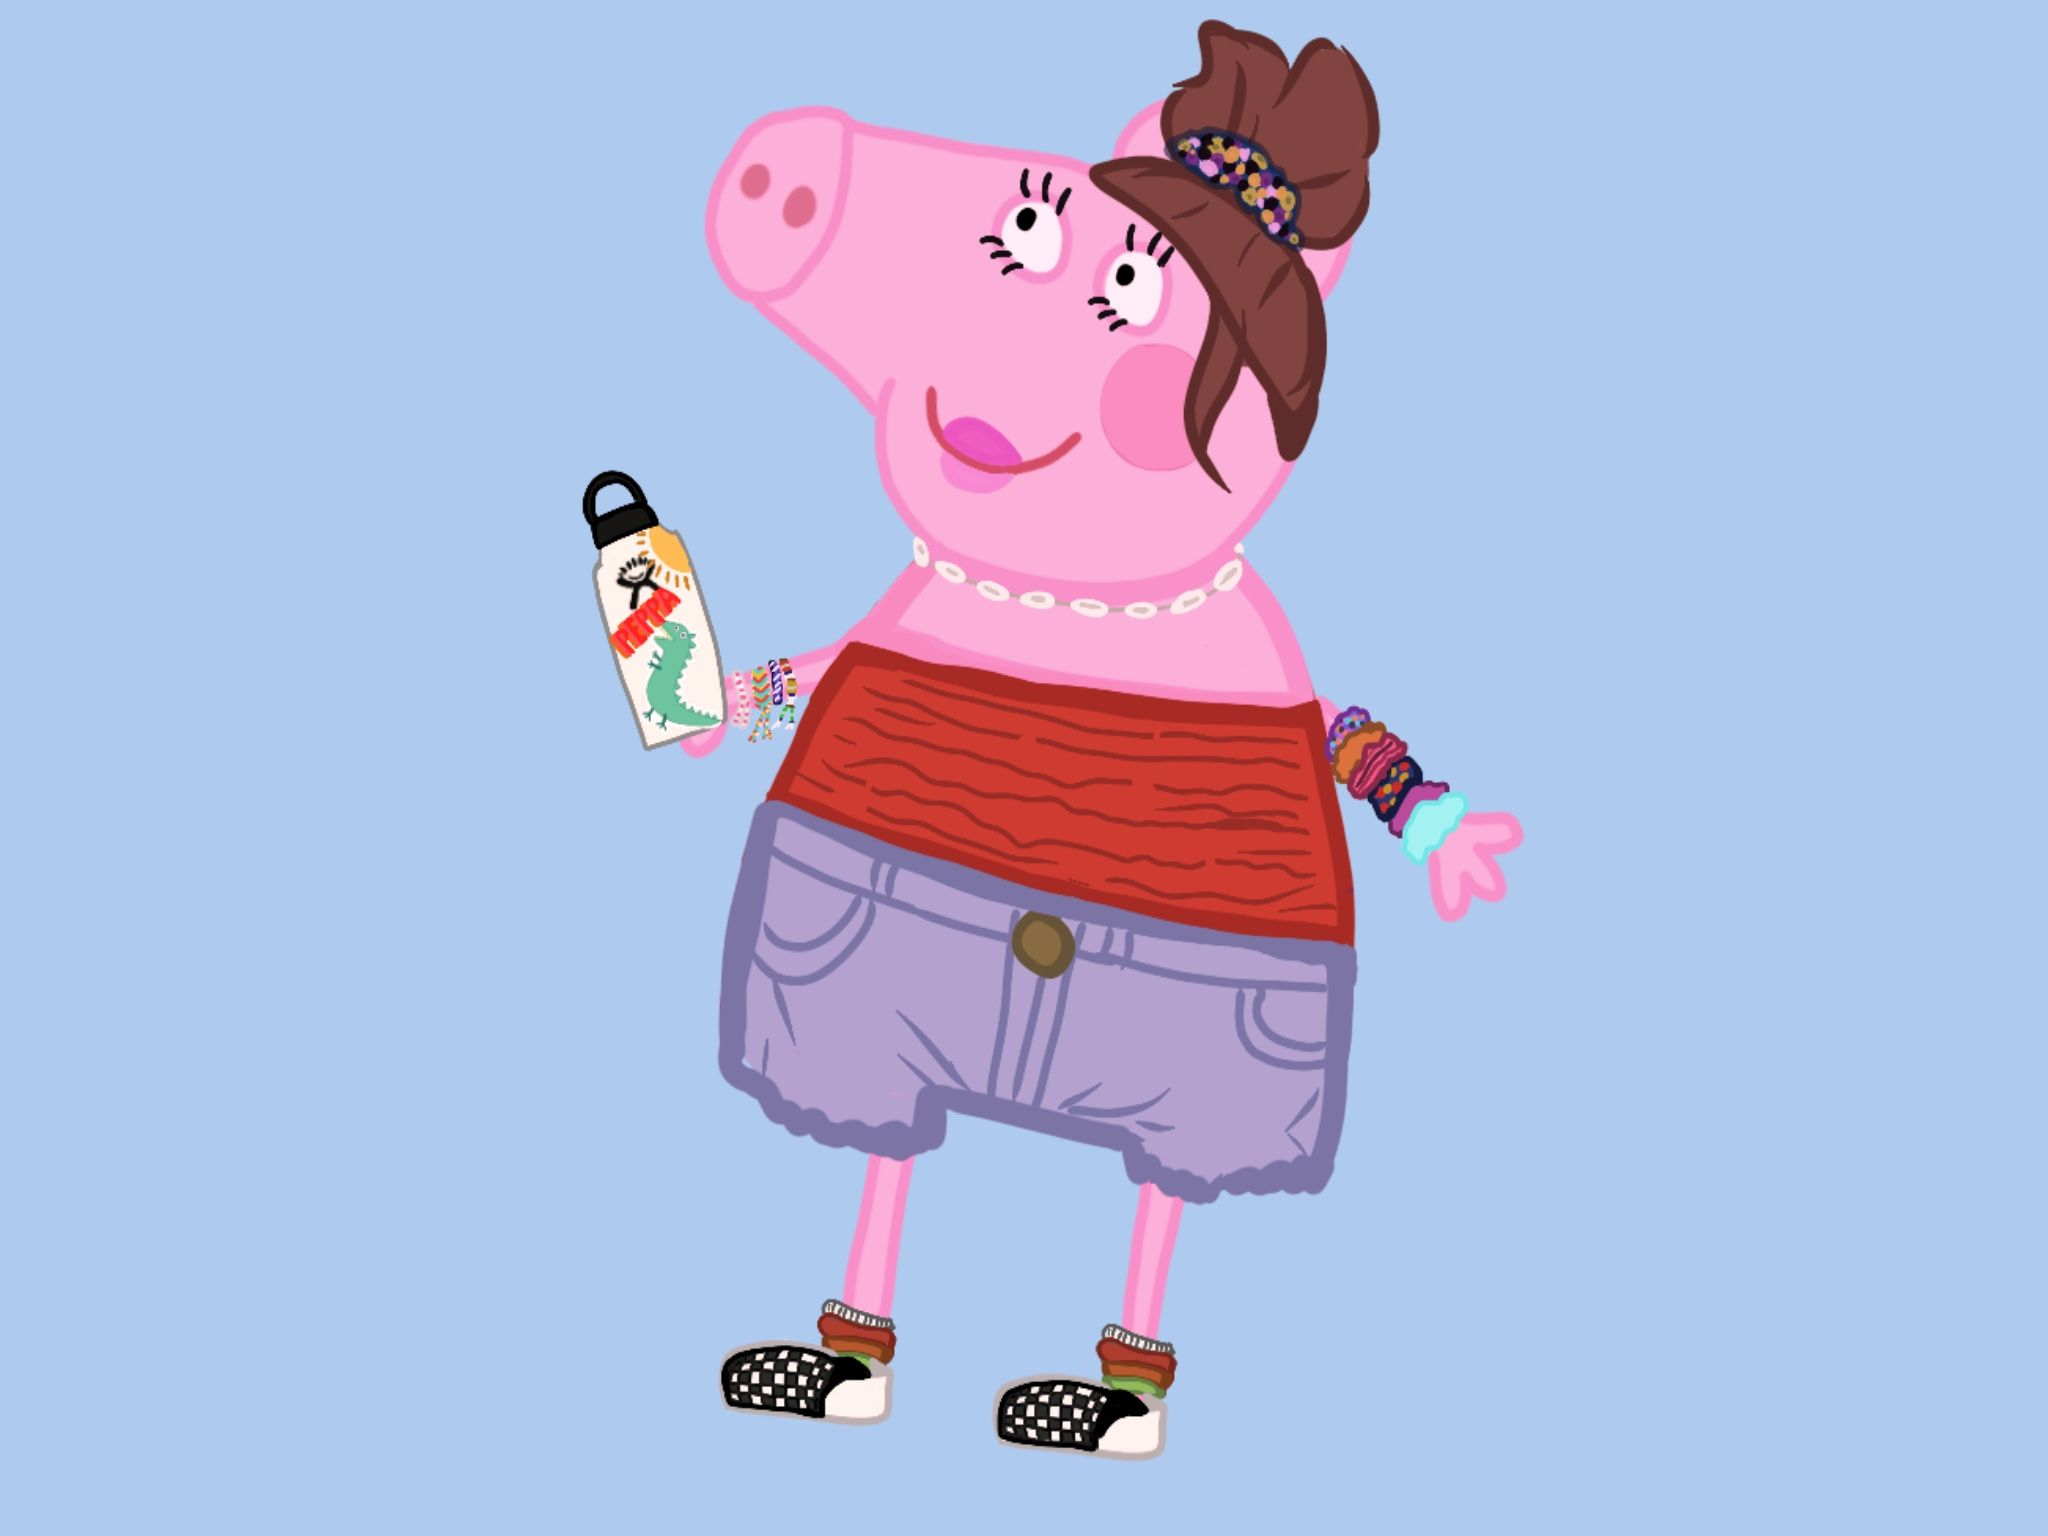 2048x1536 Peppa Pig as a VSCO girl | Peppa pig funny, Peppa pig wallpaper, Peppa pig memes